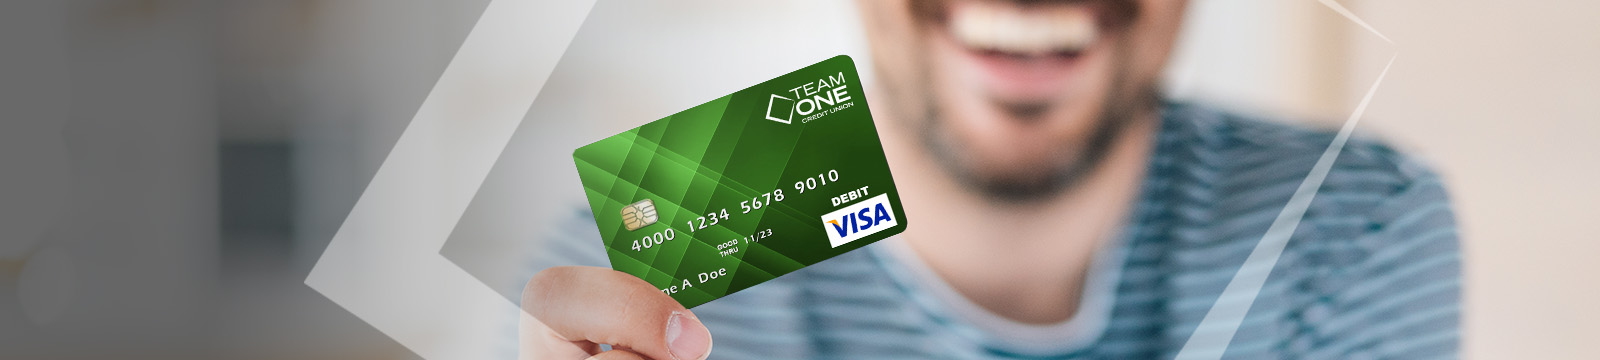 Debit Card Banner Image | Team One Credit Union